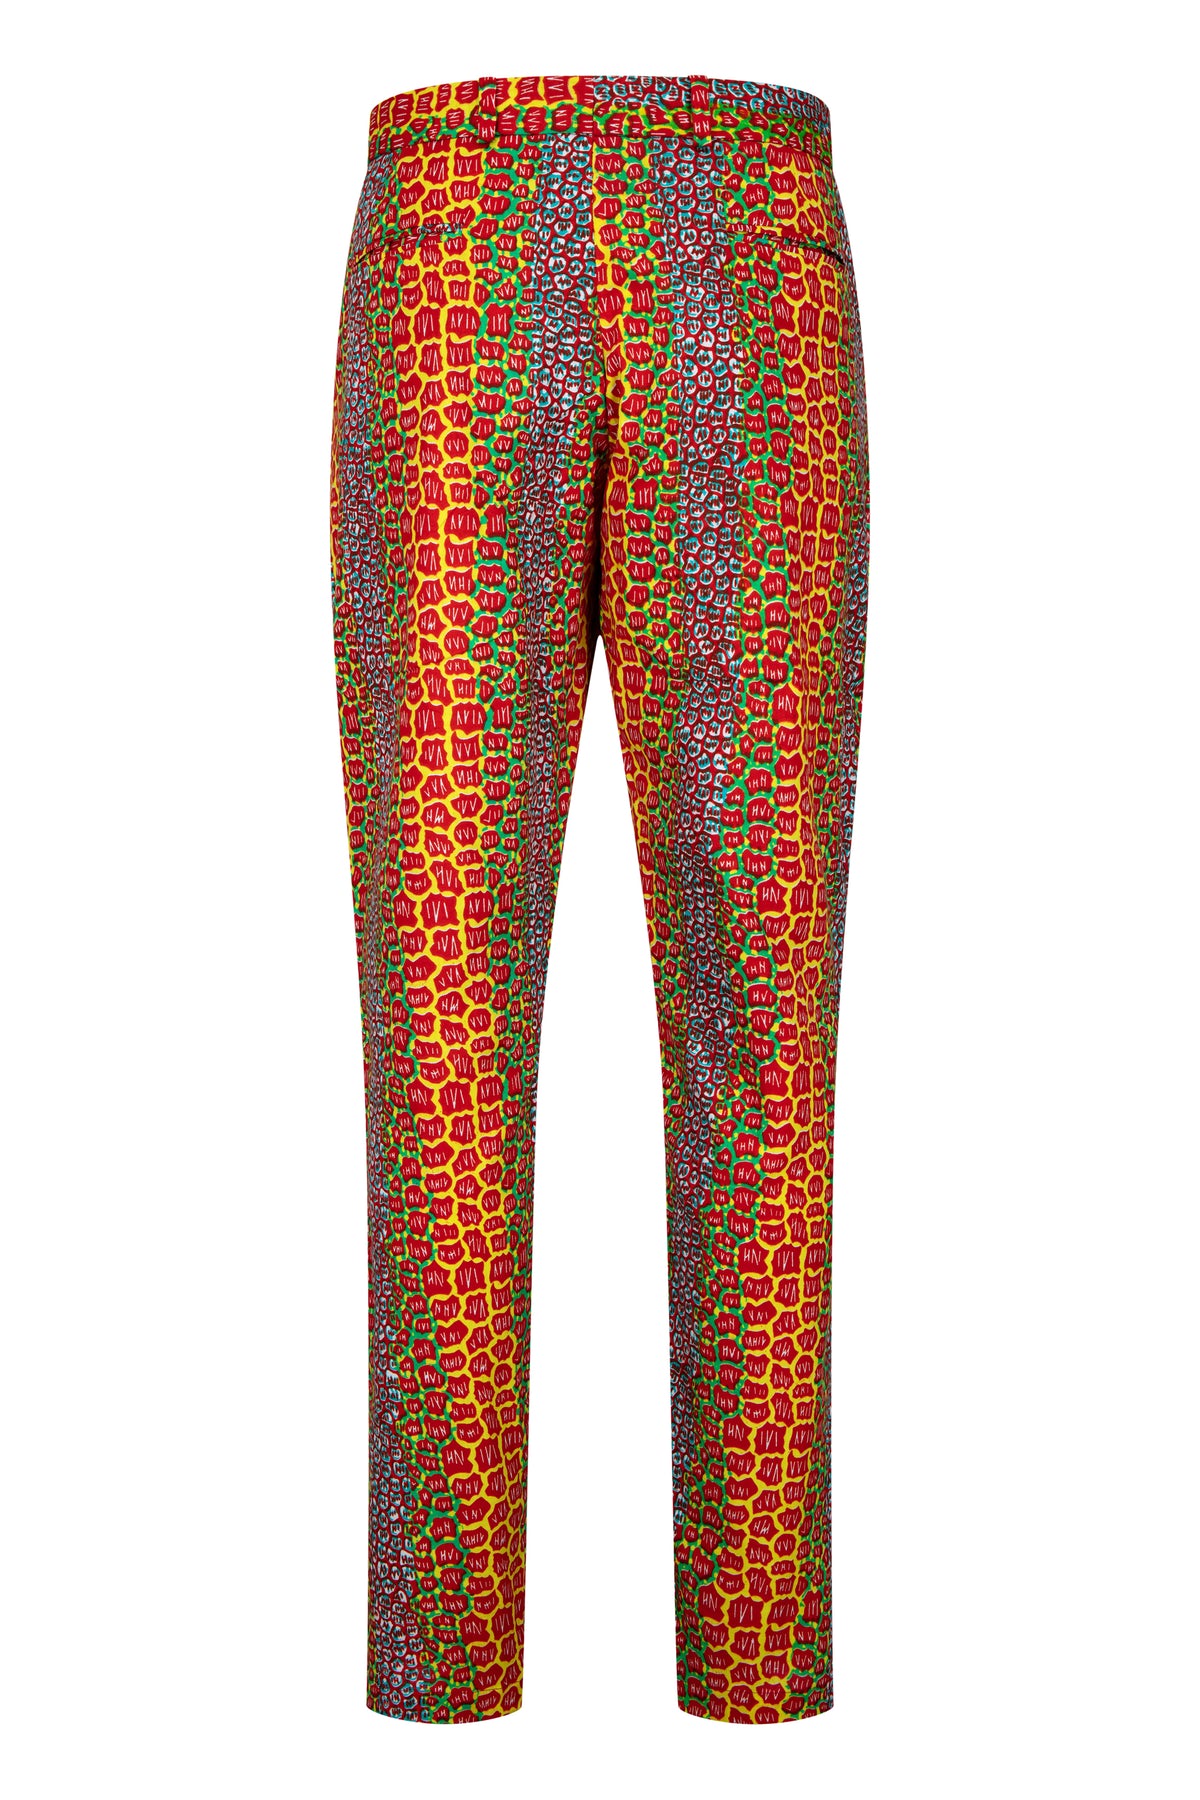 Osei straight leg trousers-Firestone - OHEMA OHENE AFRICAN INSPIRED FASHION